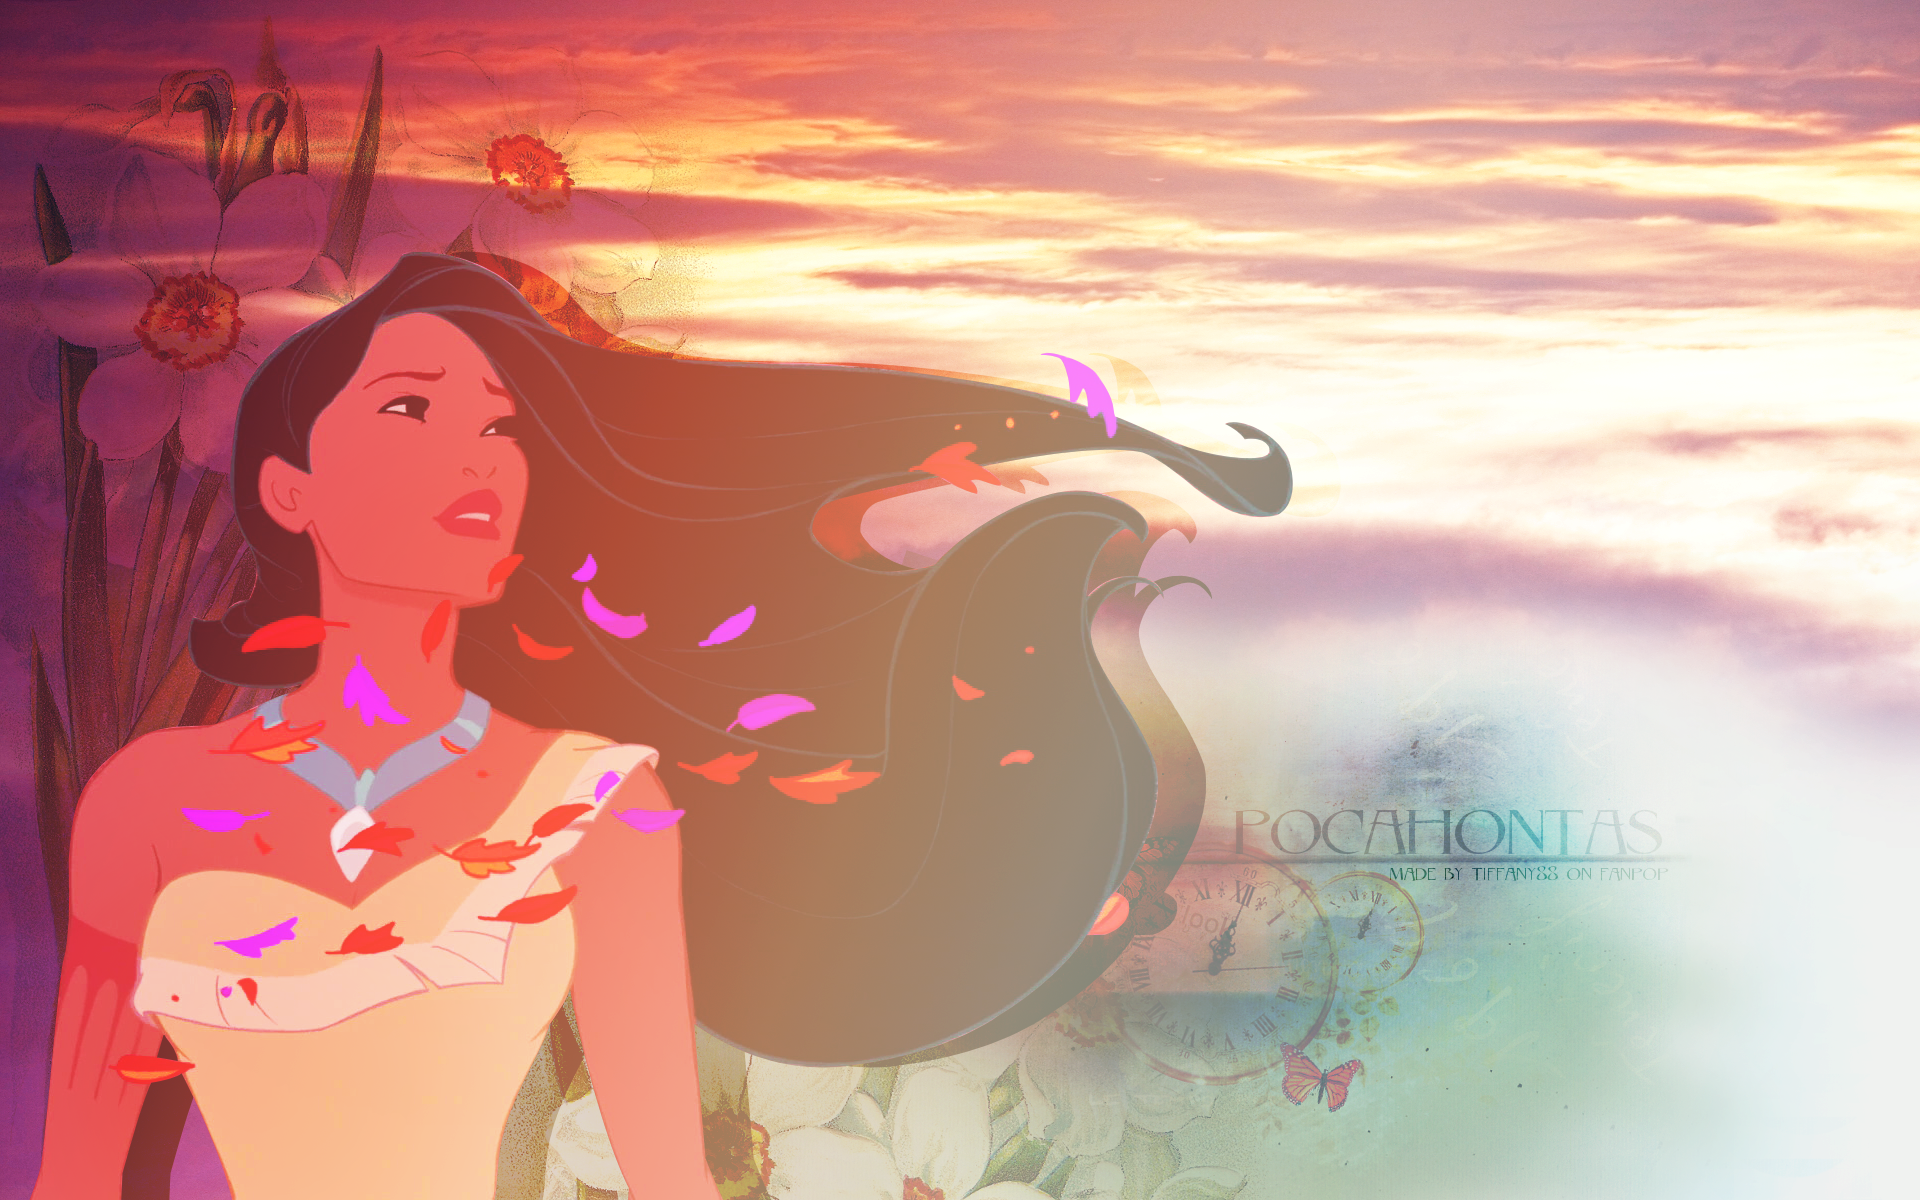 Pocahontas - Disney Princess Wallpaper (34405906) - Fanpop